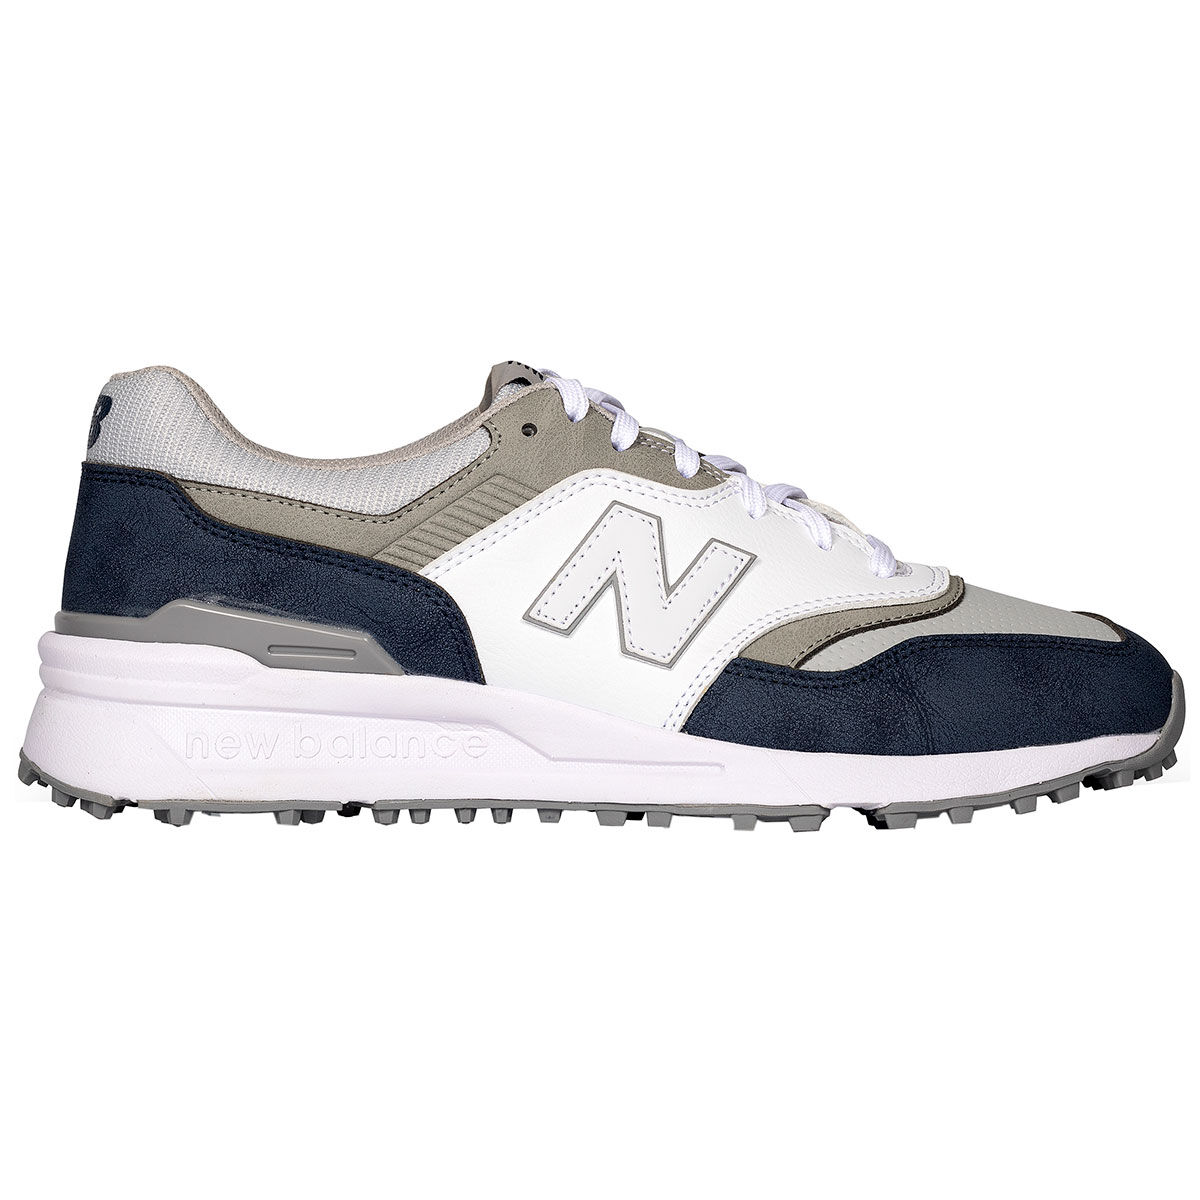 New Balance Men’s 997 Waterproof Spikeless Golf Shoes, Mens, White/navy, 8 | American Golf